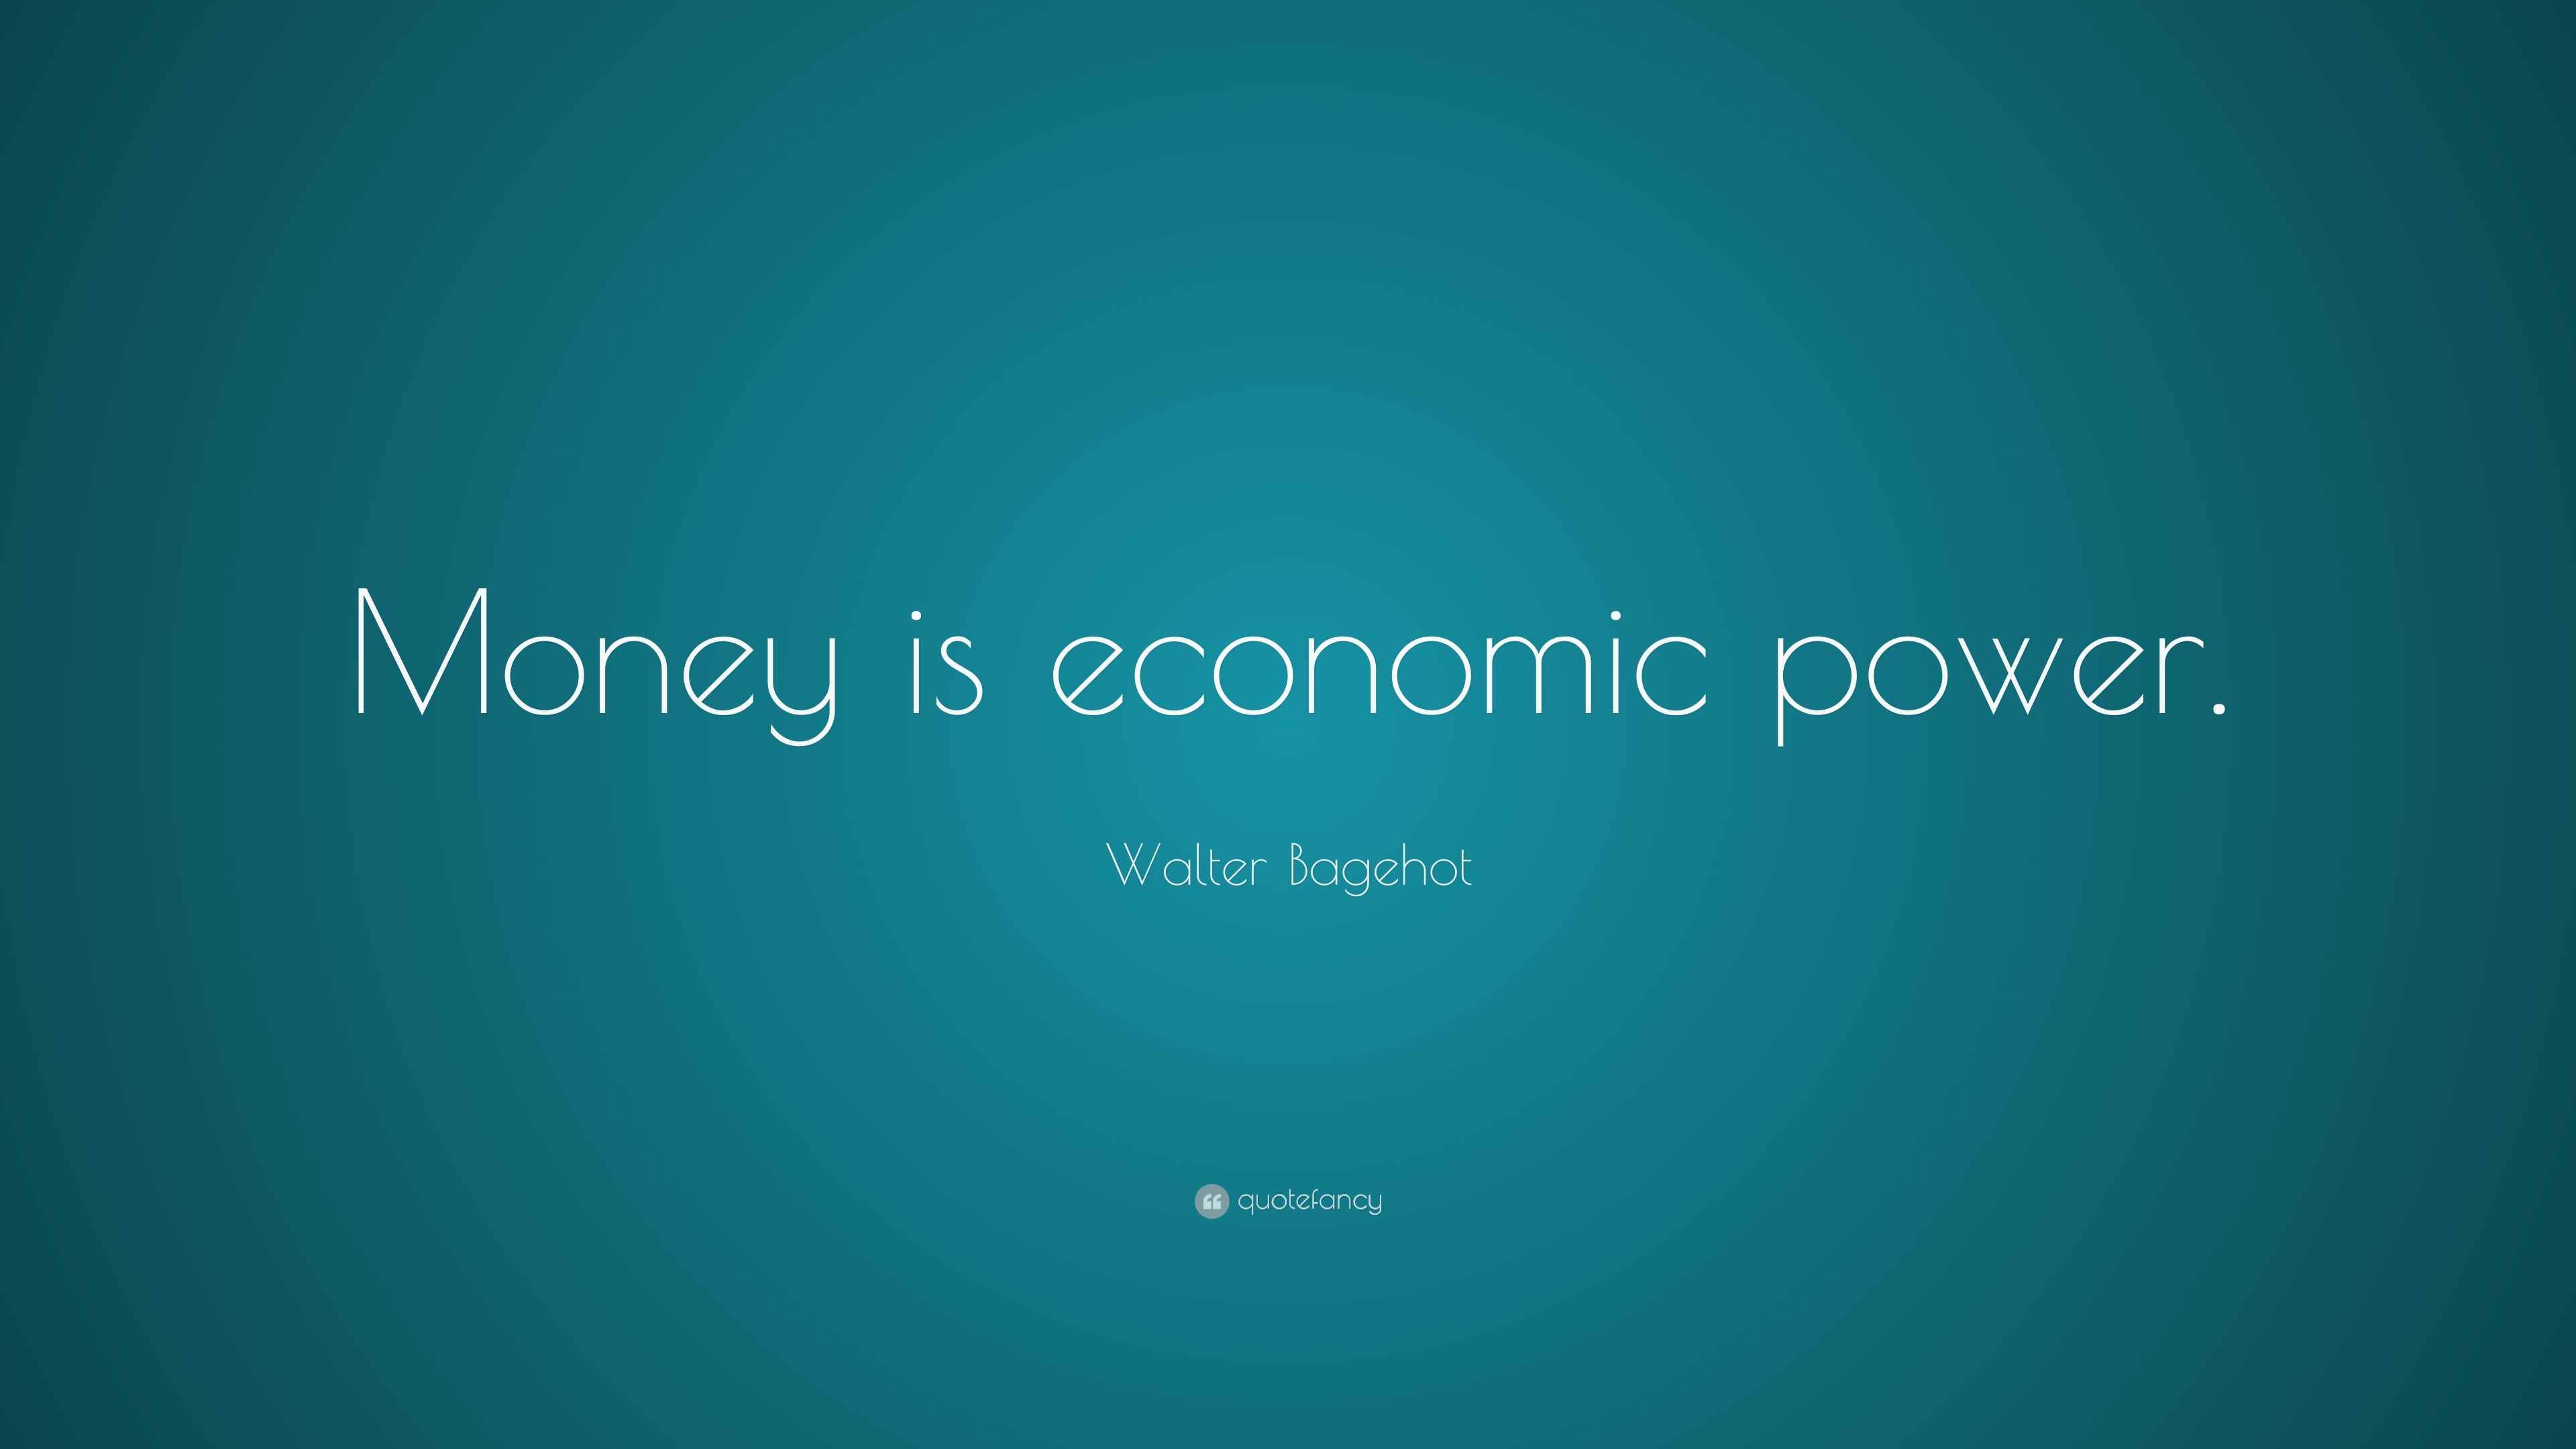 Walter Bagehot Quote: “Money is economic power.” (10 wallpaper)